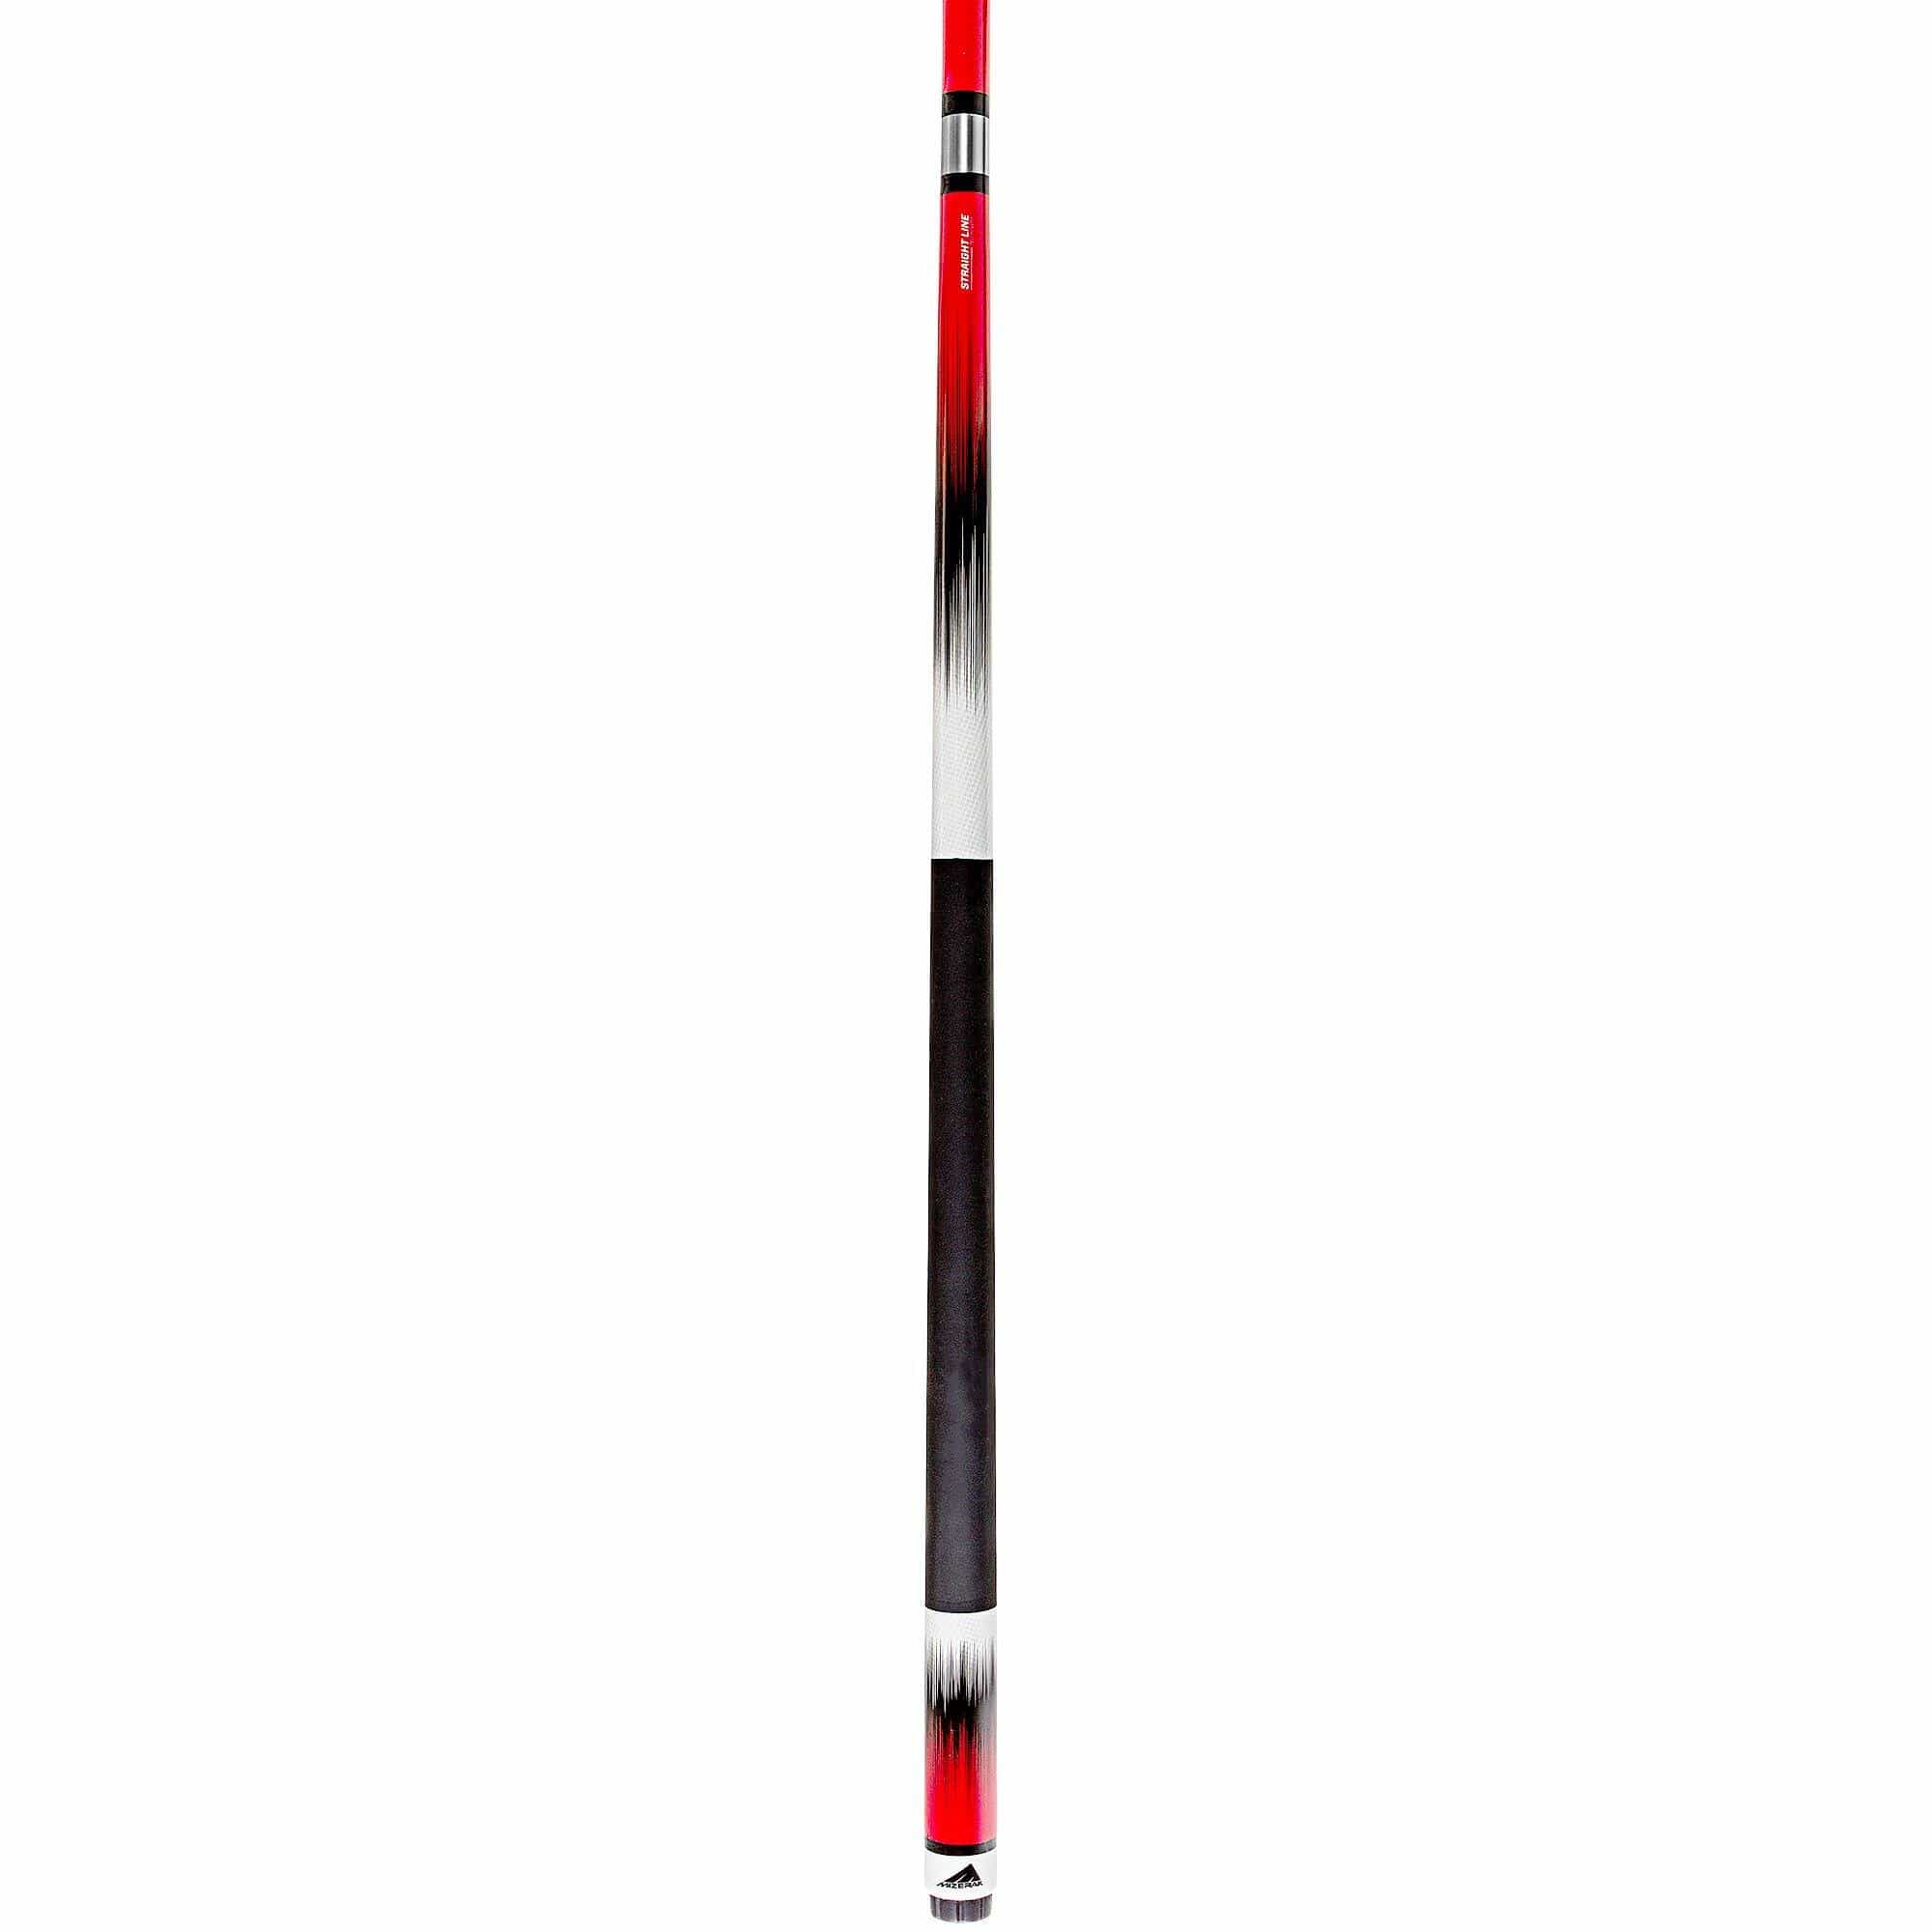 Mizerak Billiards Mizerak - 58" Two-Piece Neon Red Fade Deluxe Carbon Composite Billiard / Pool Cue with MicroTac Grip ( Red ) - P1881R